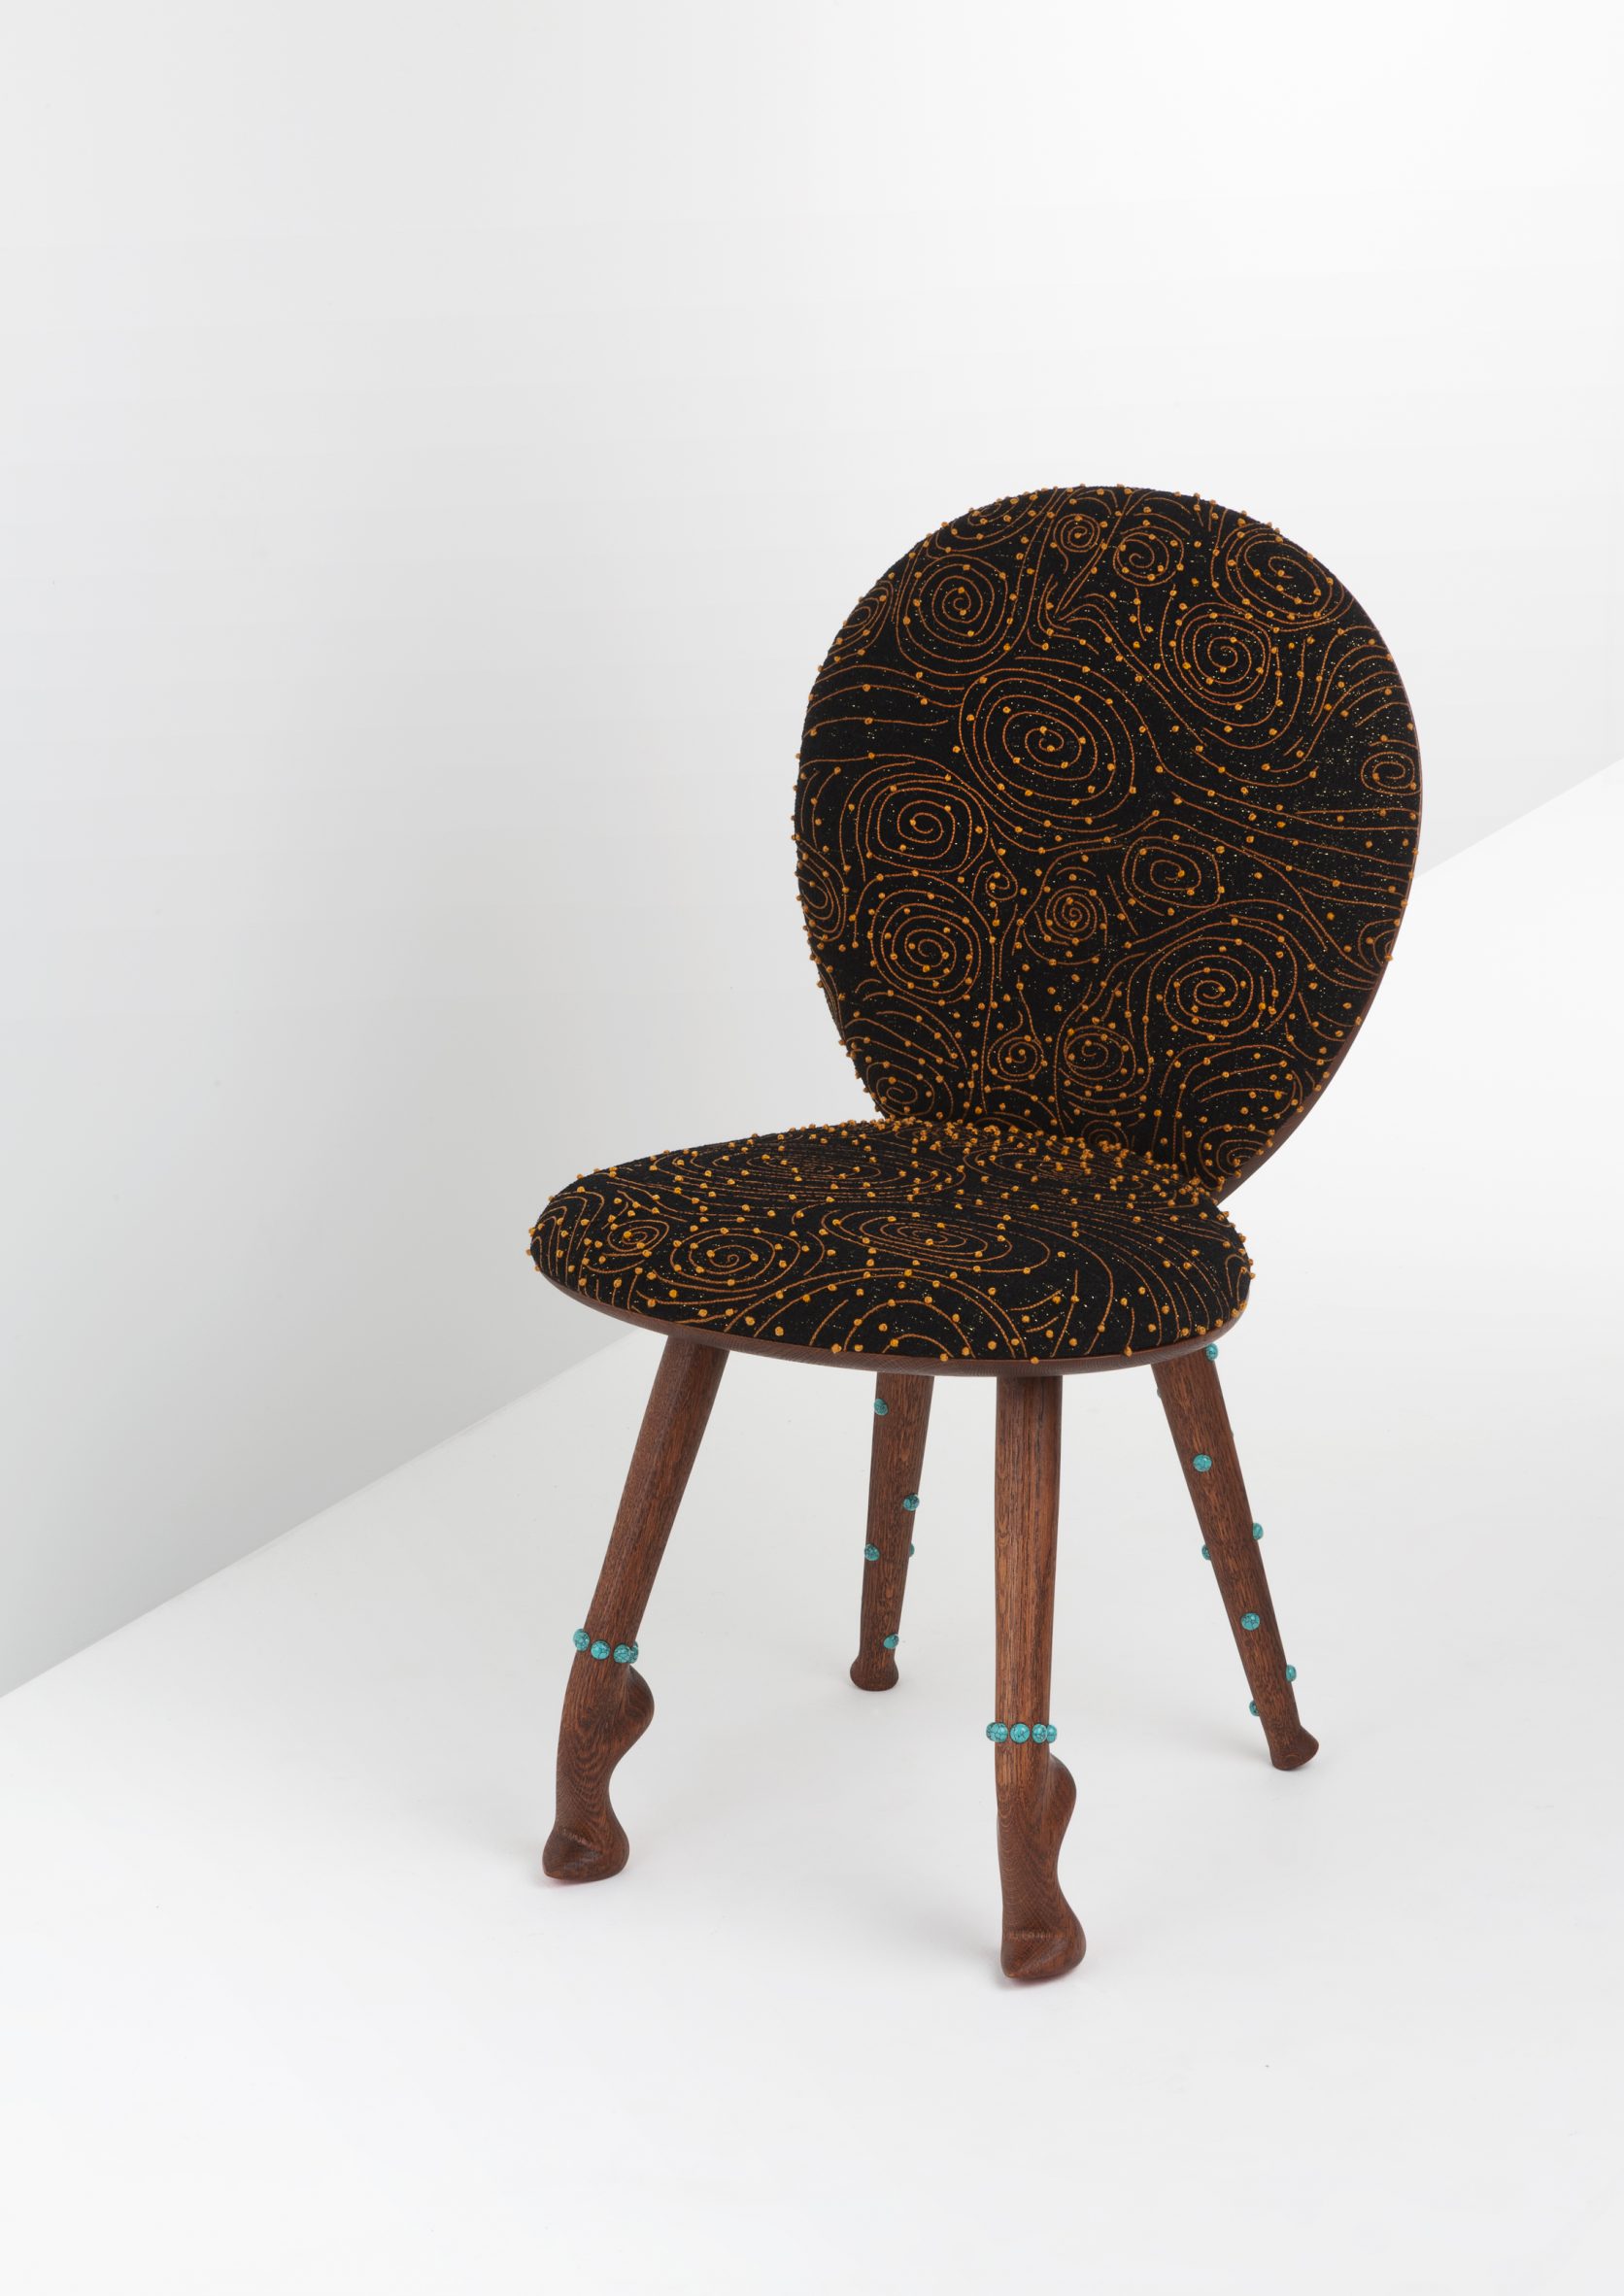 The Zenobie chair by Pierre Yovanovitch and Christian Louboutin